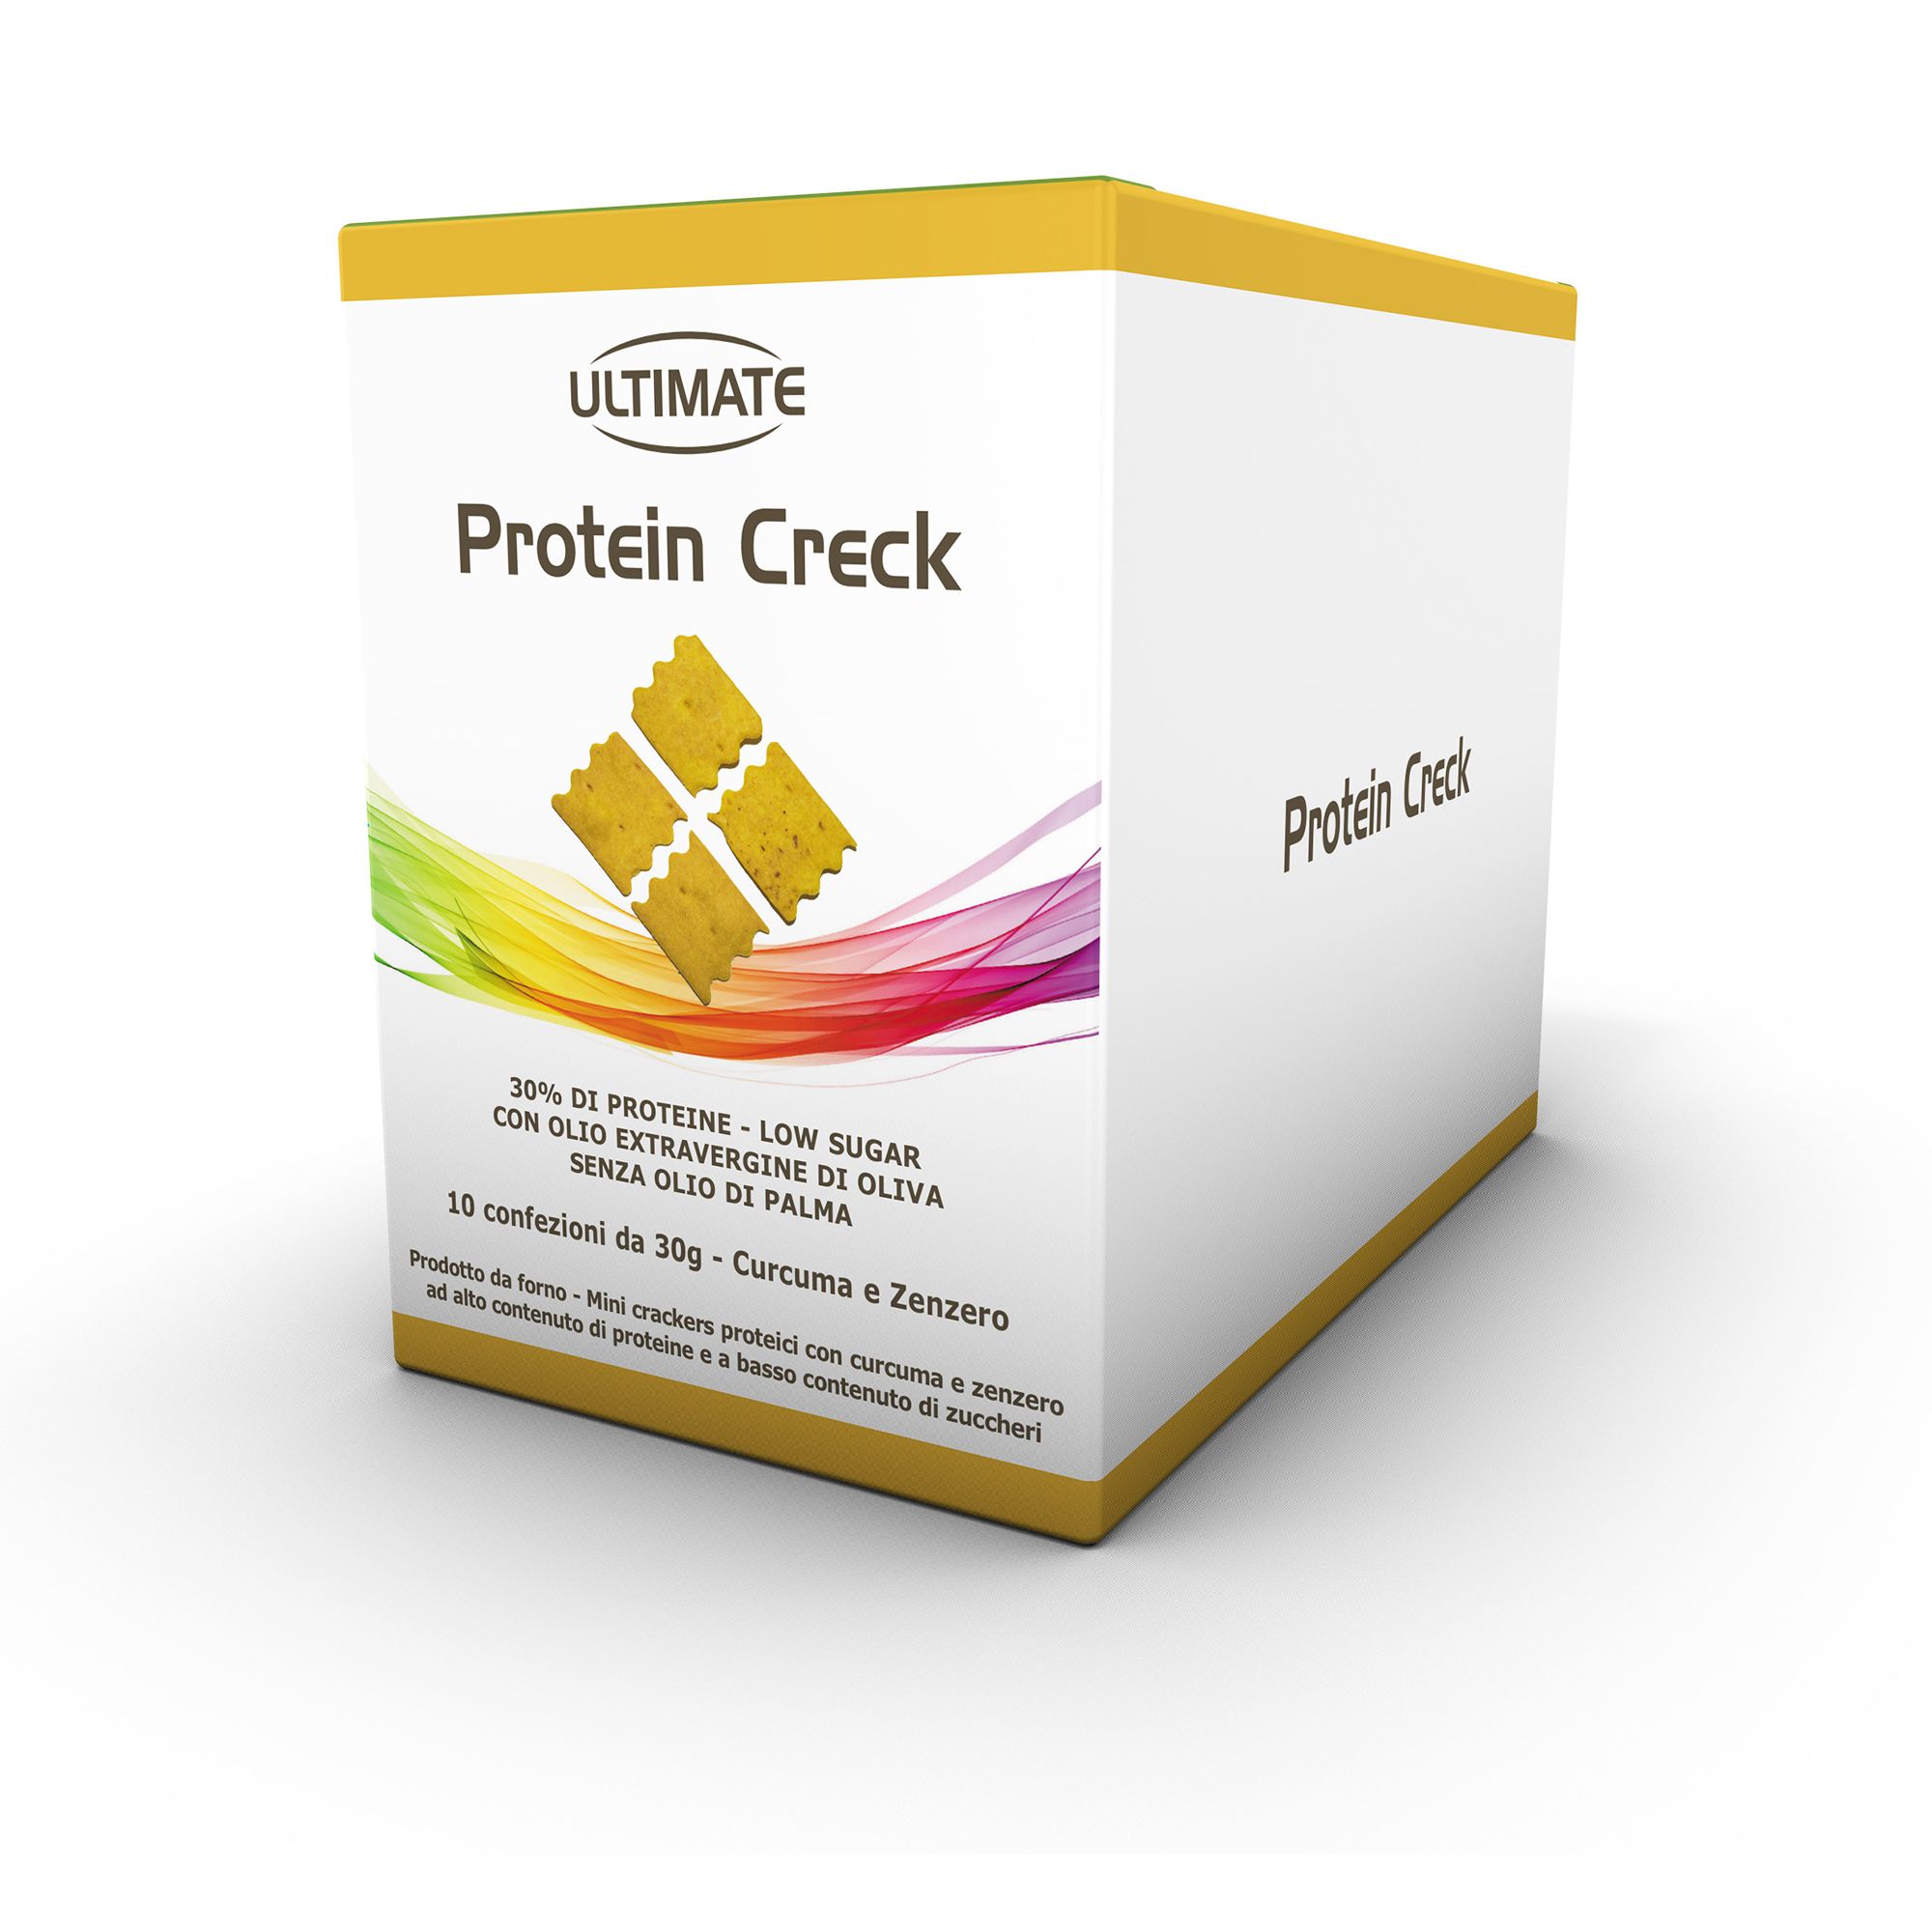 Protein Creck Crackers proteici con olio extravergine